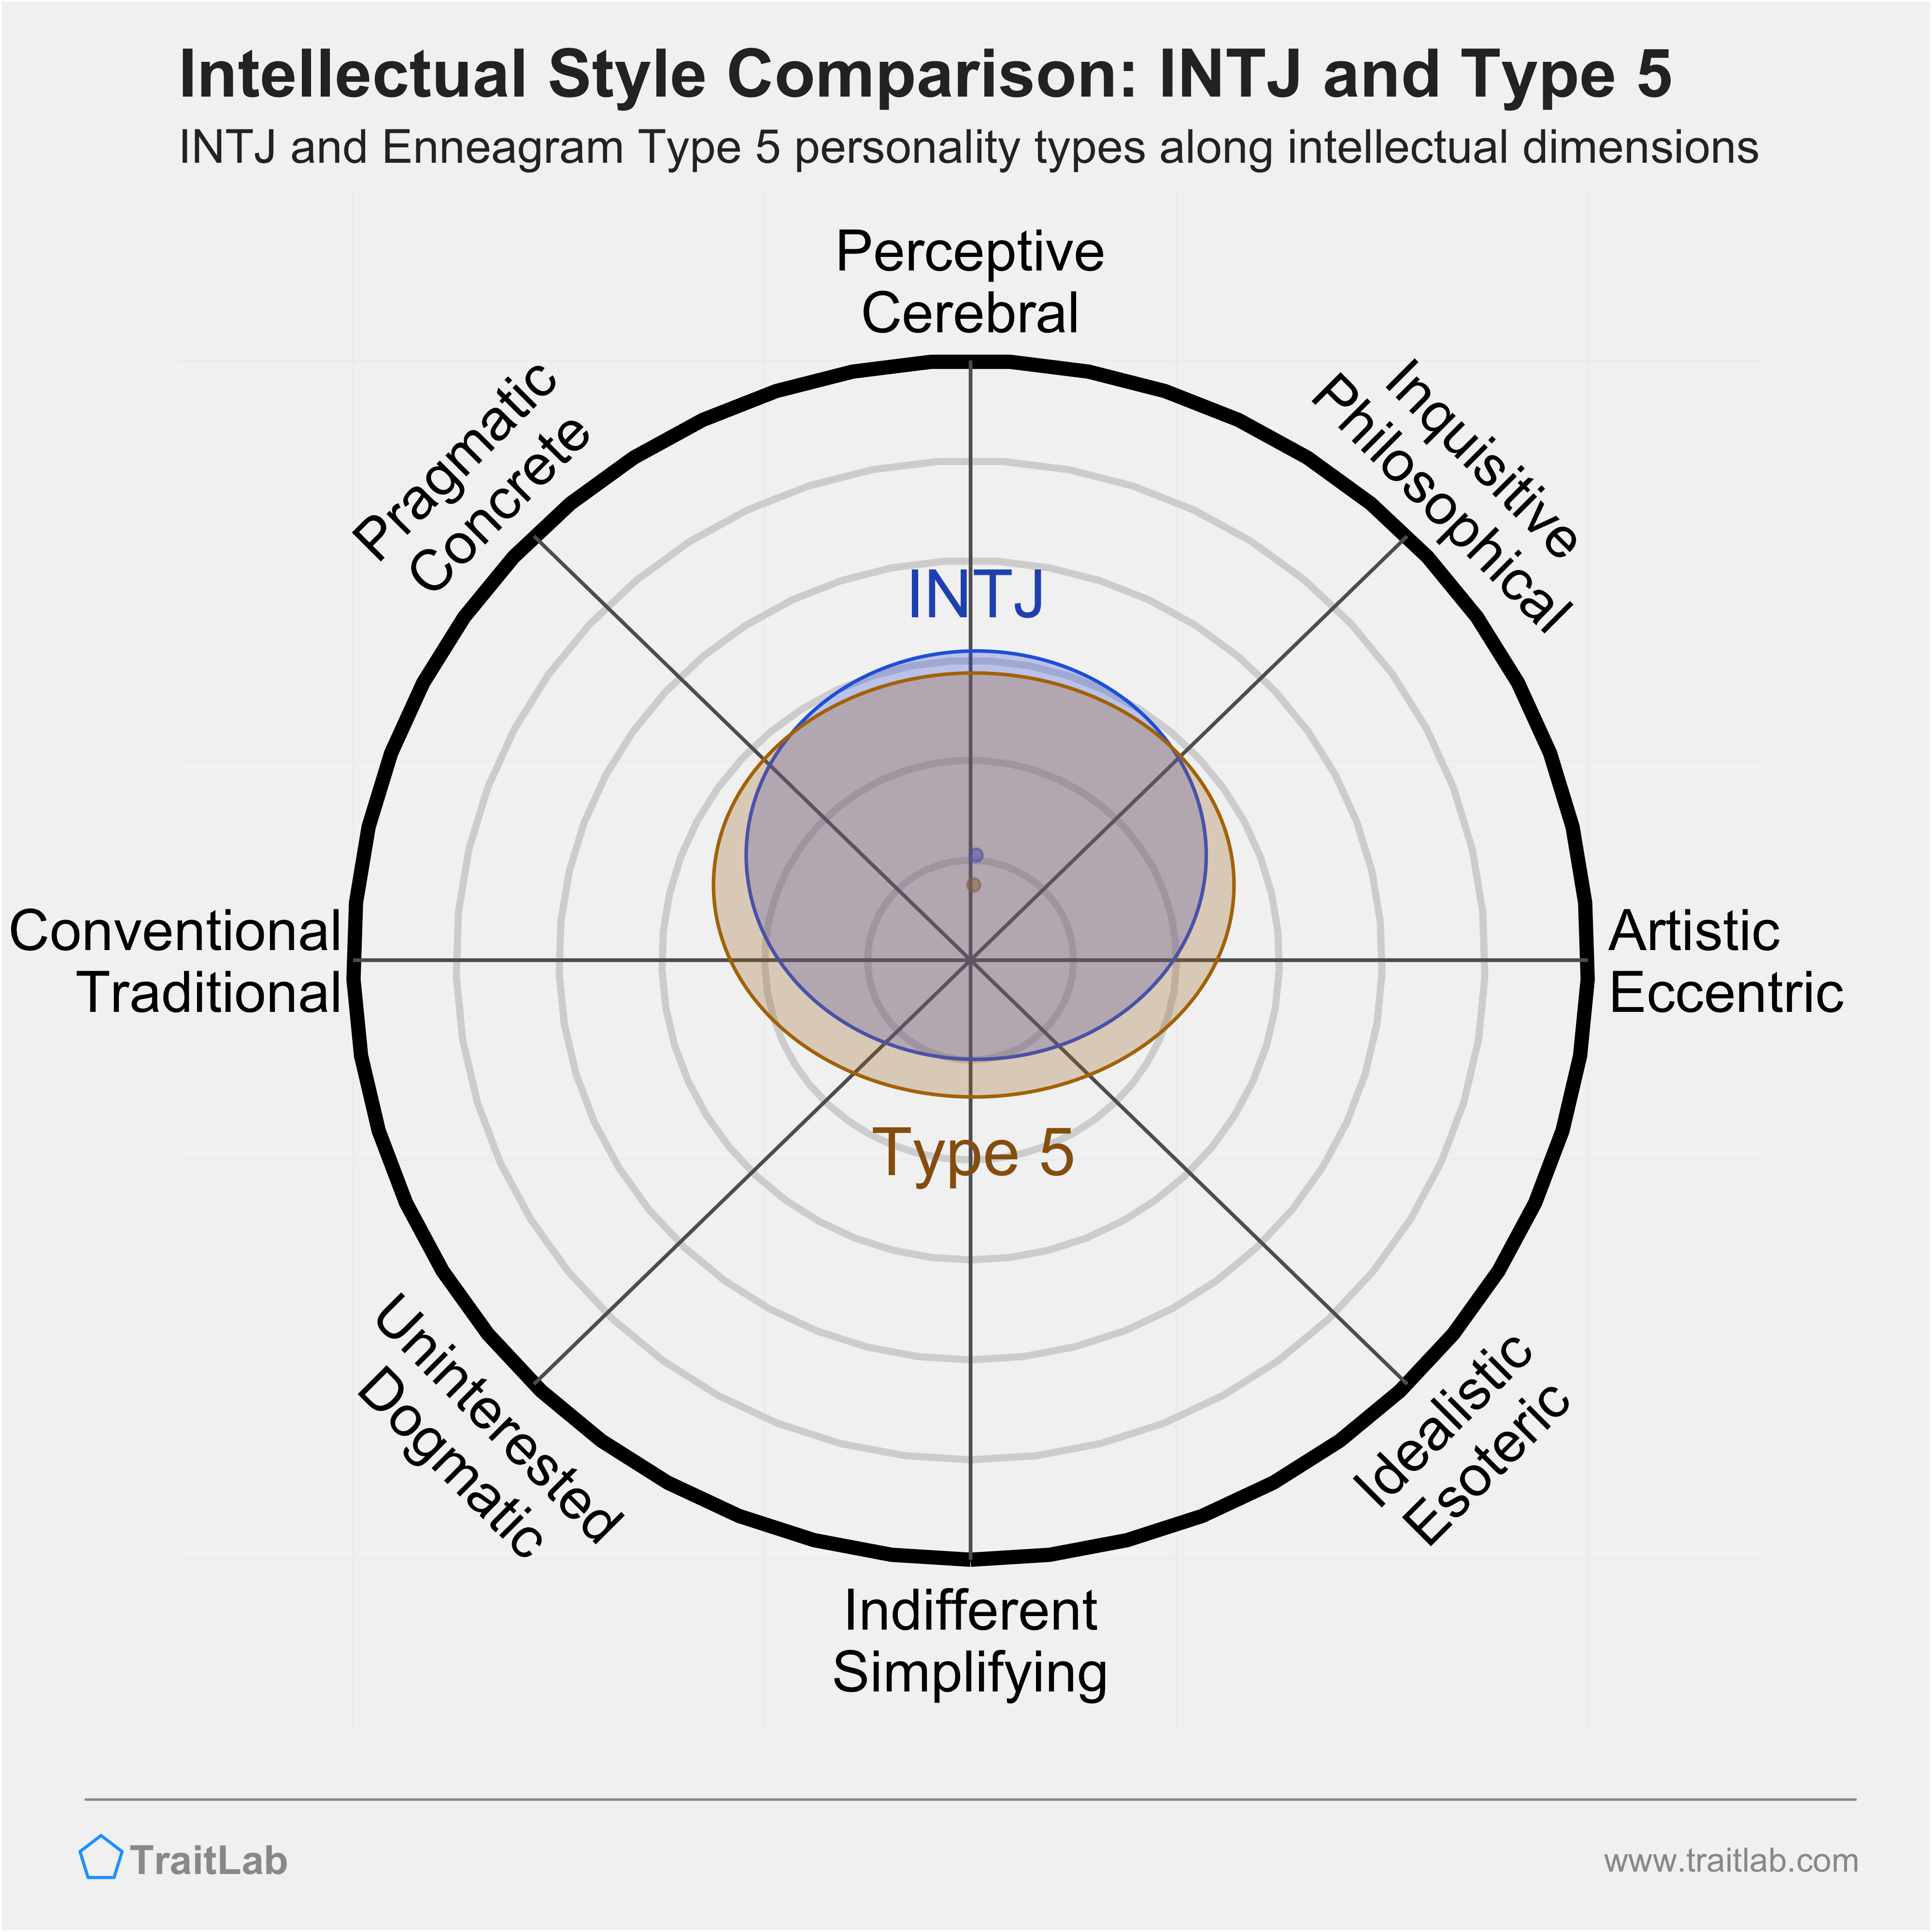 INTJ and Type 5 comparison across intellectual dimensions